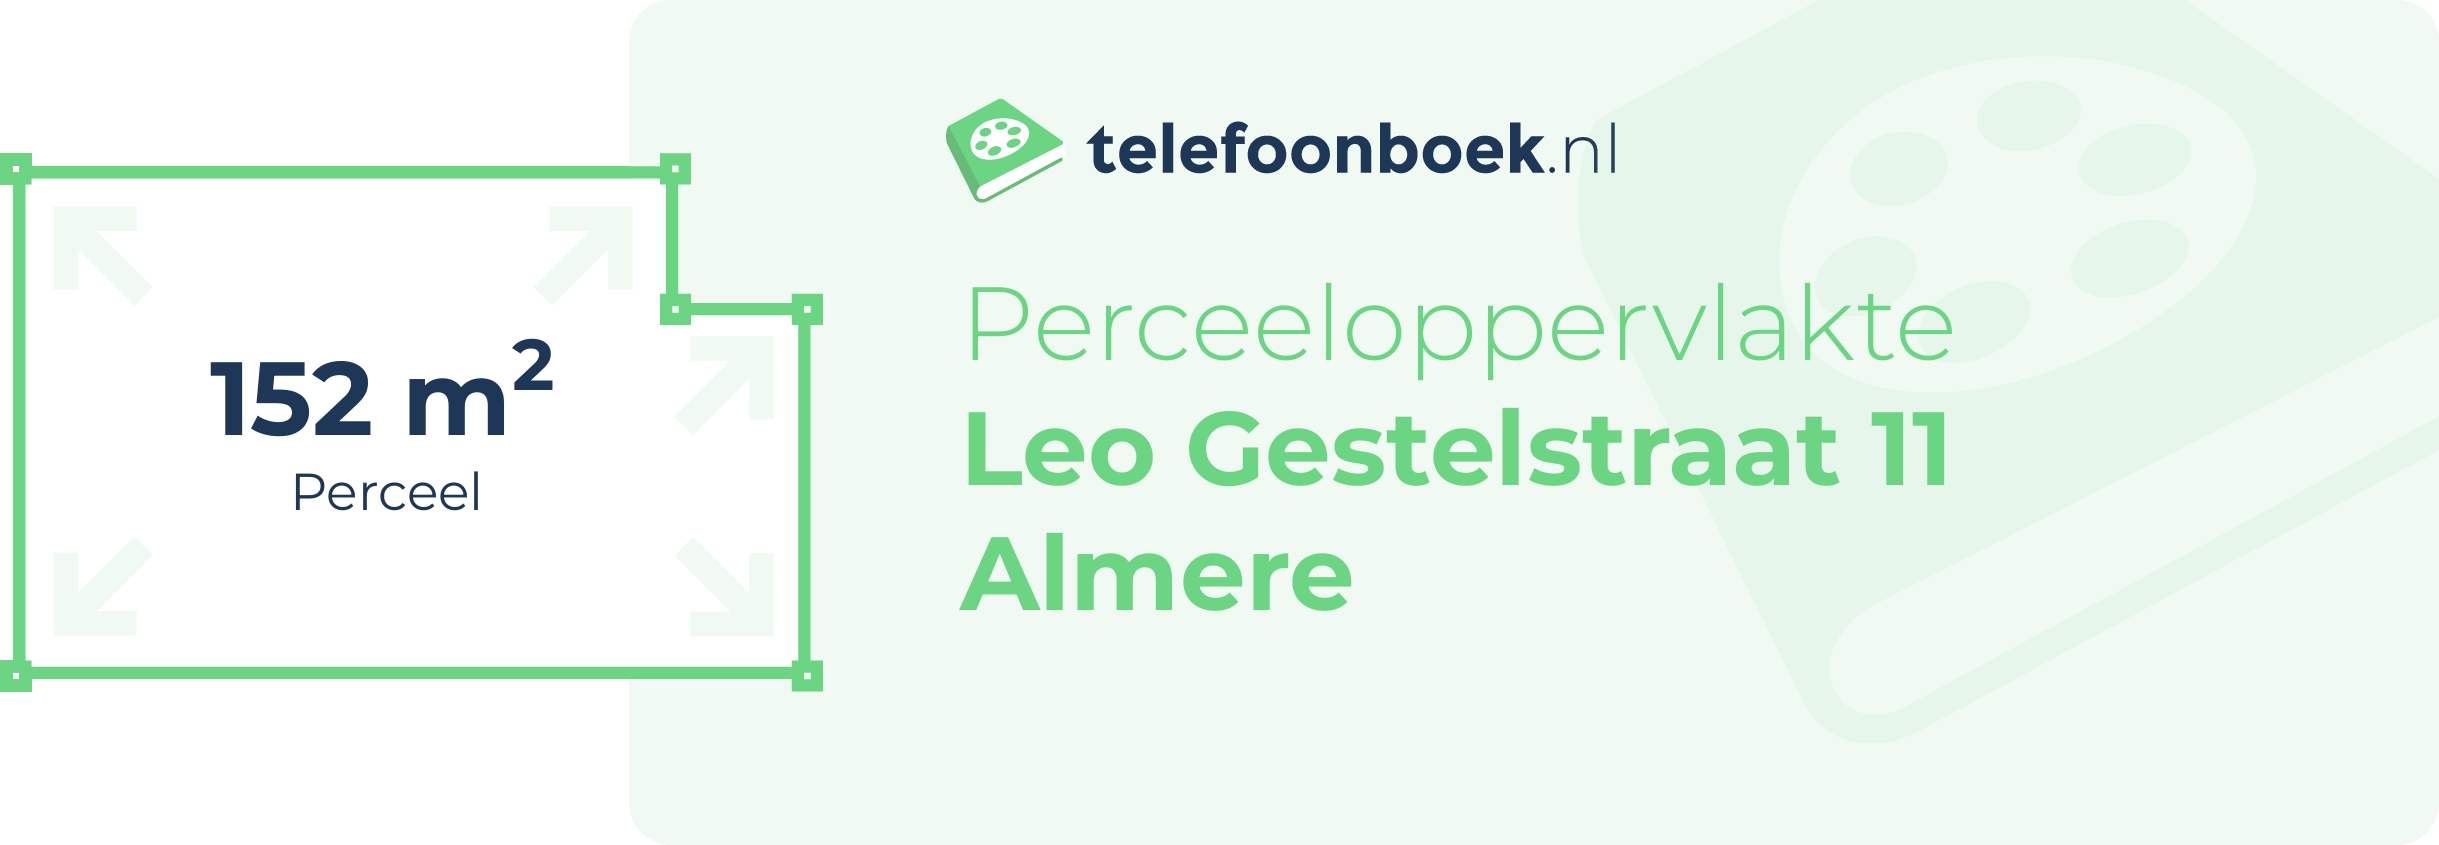 Perceeloppervlakte Leo Gestelstraat 11 Almere